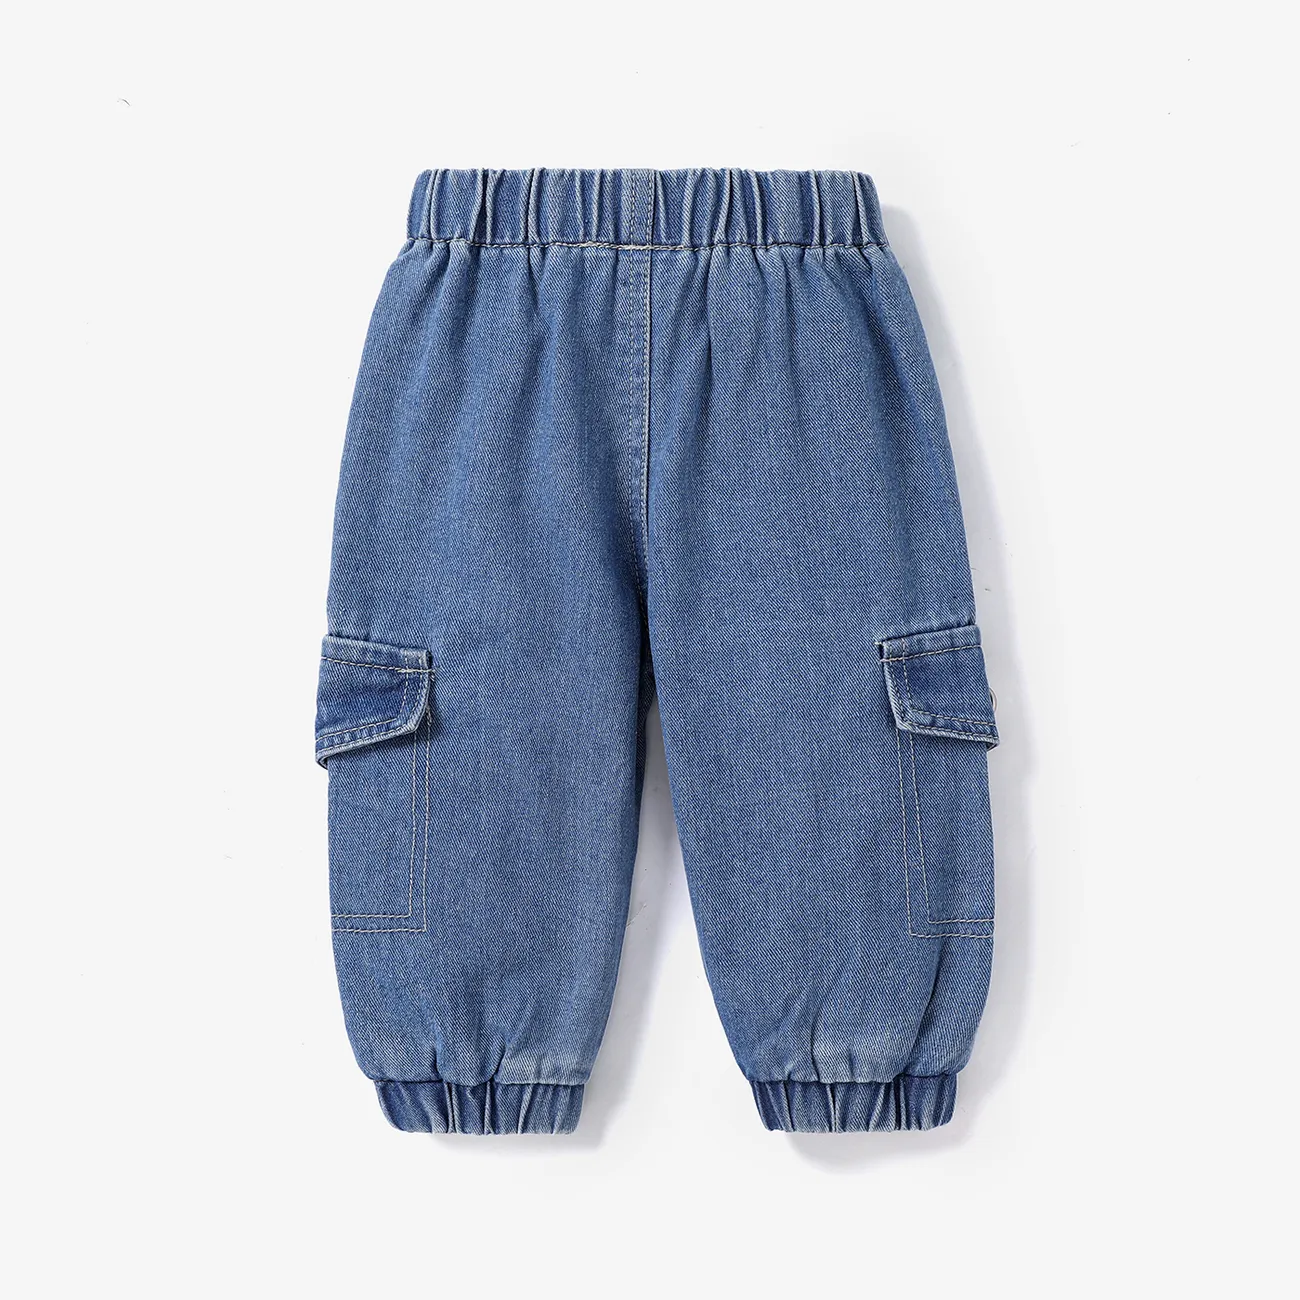 Bebé / Niño Niña / Niño Niño Abrigo de color sólido / Jeans / Suéter / Zapatos Azul big image 1